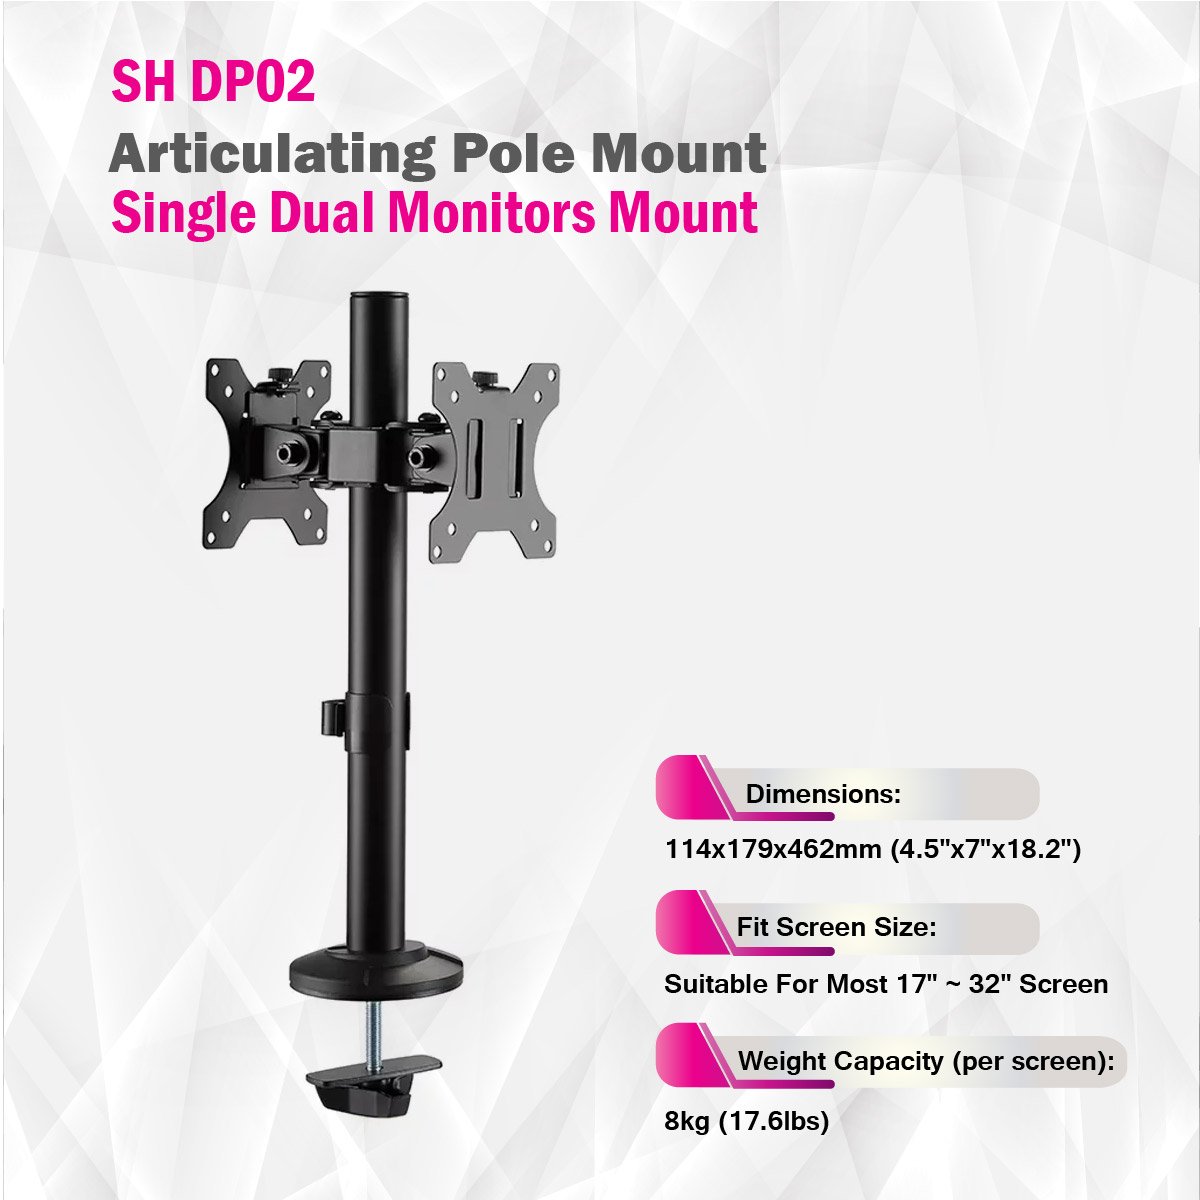 Articulating Pole Mount Single Dual Monitors Mount